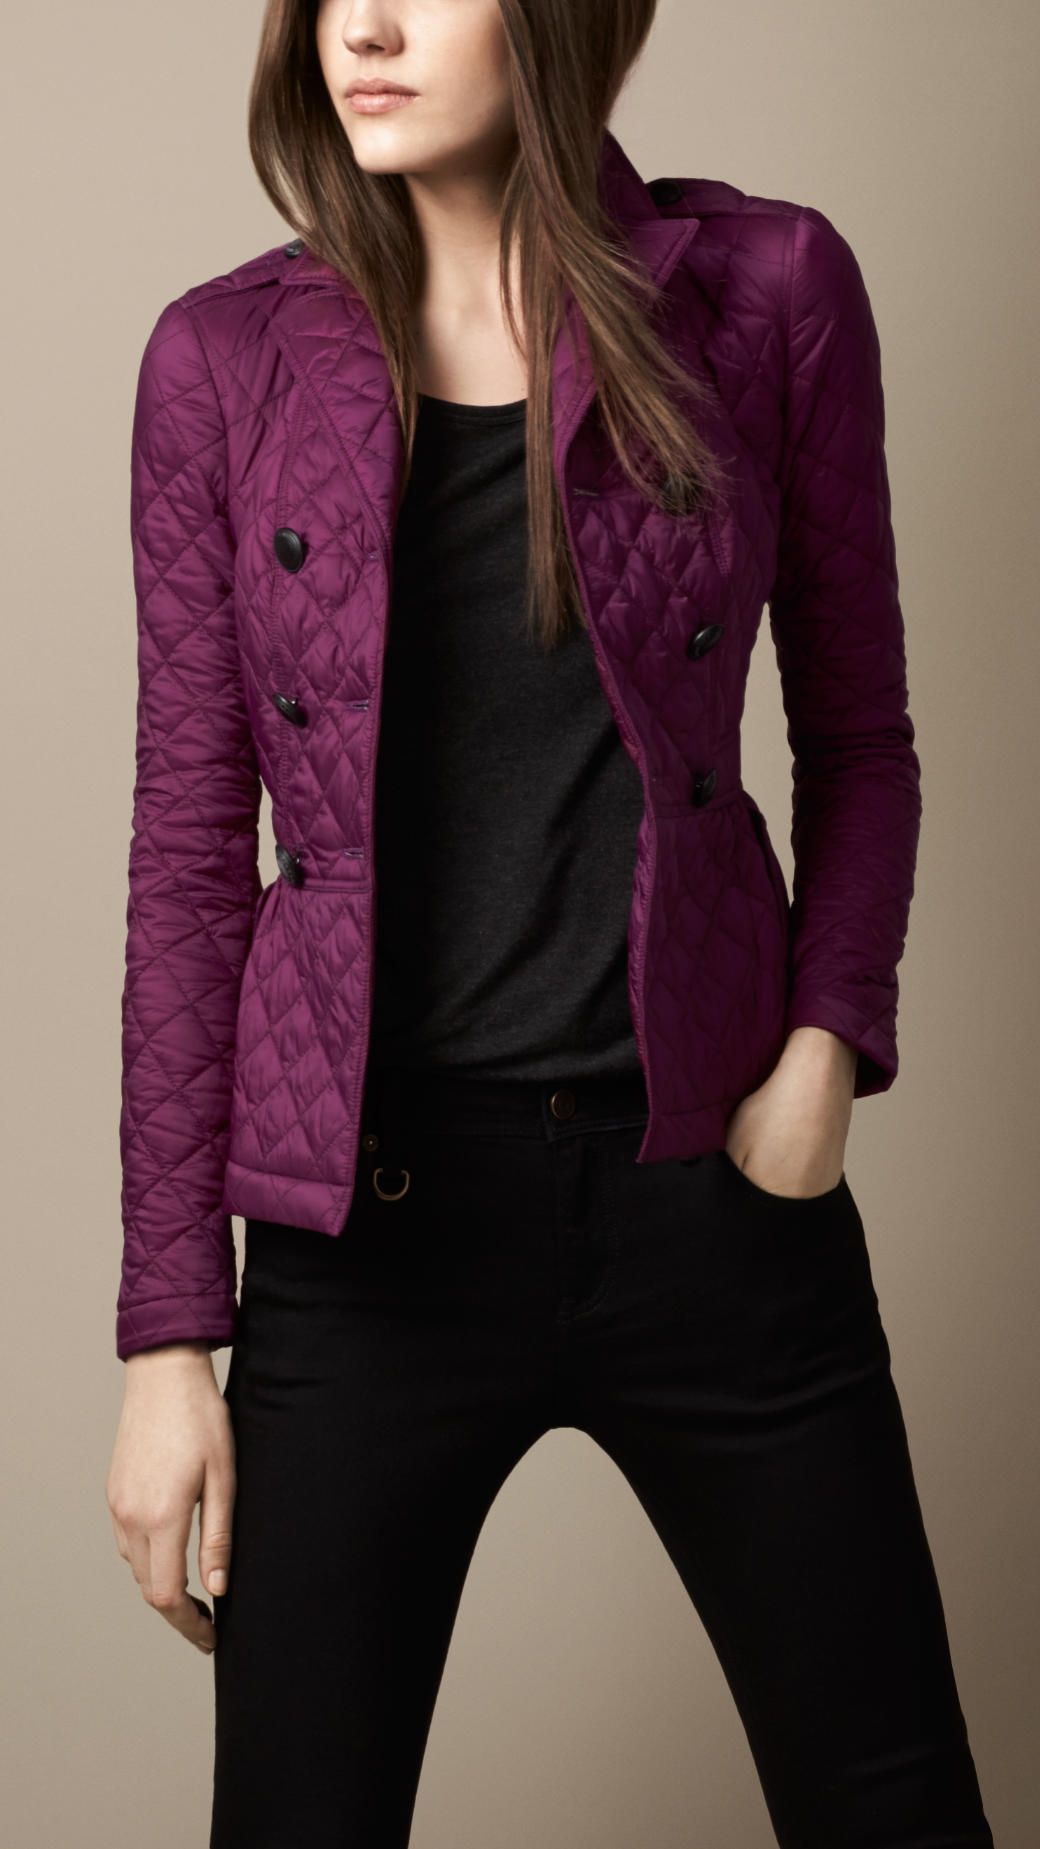 burberry jacket purple